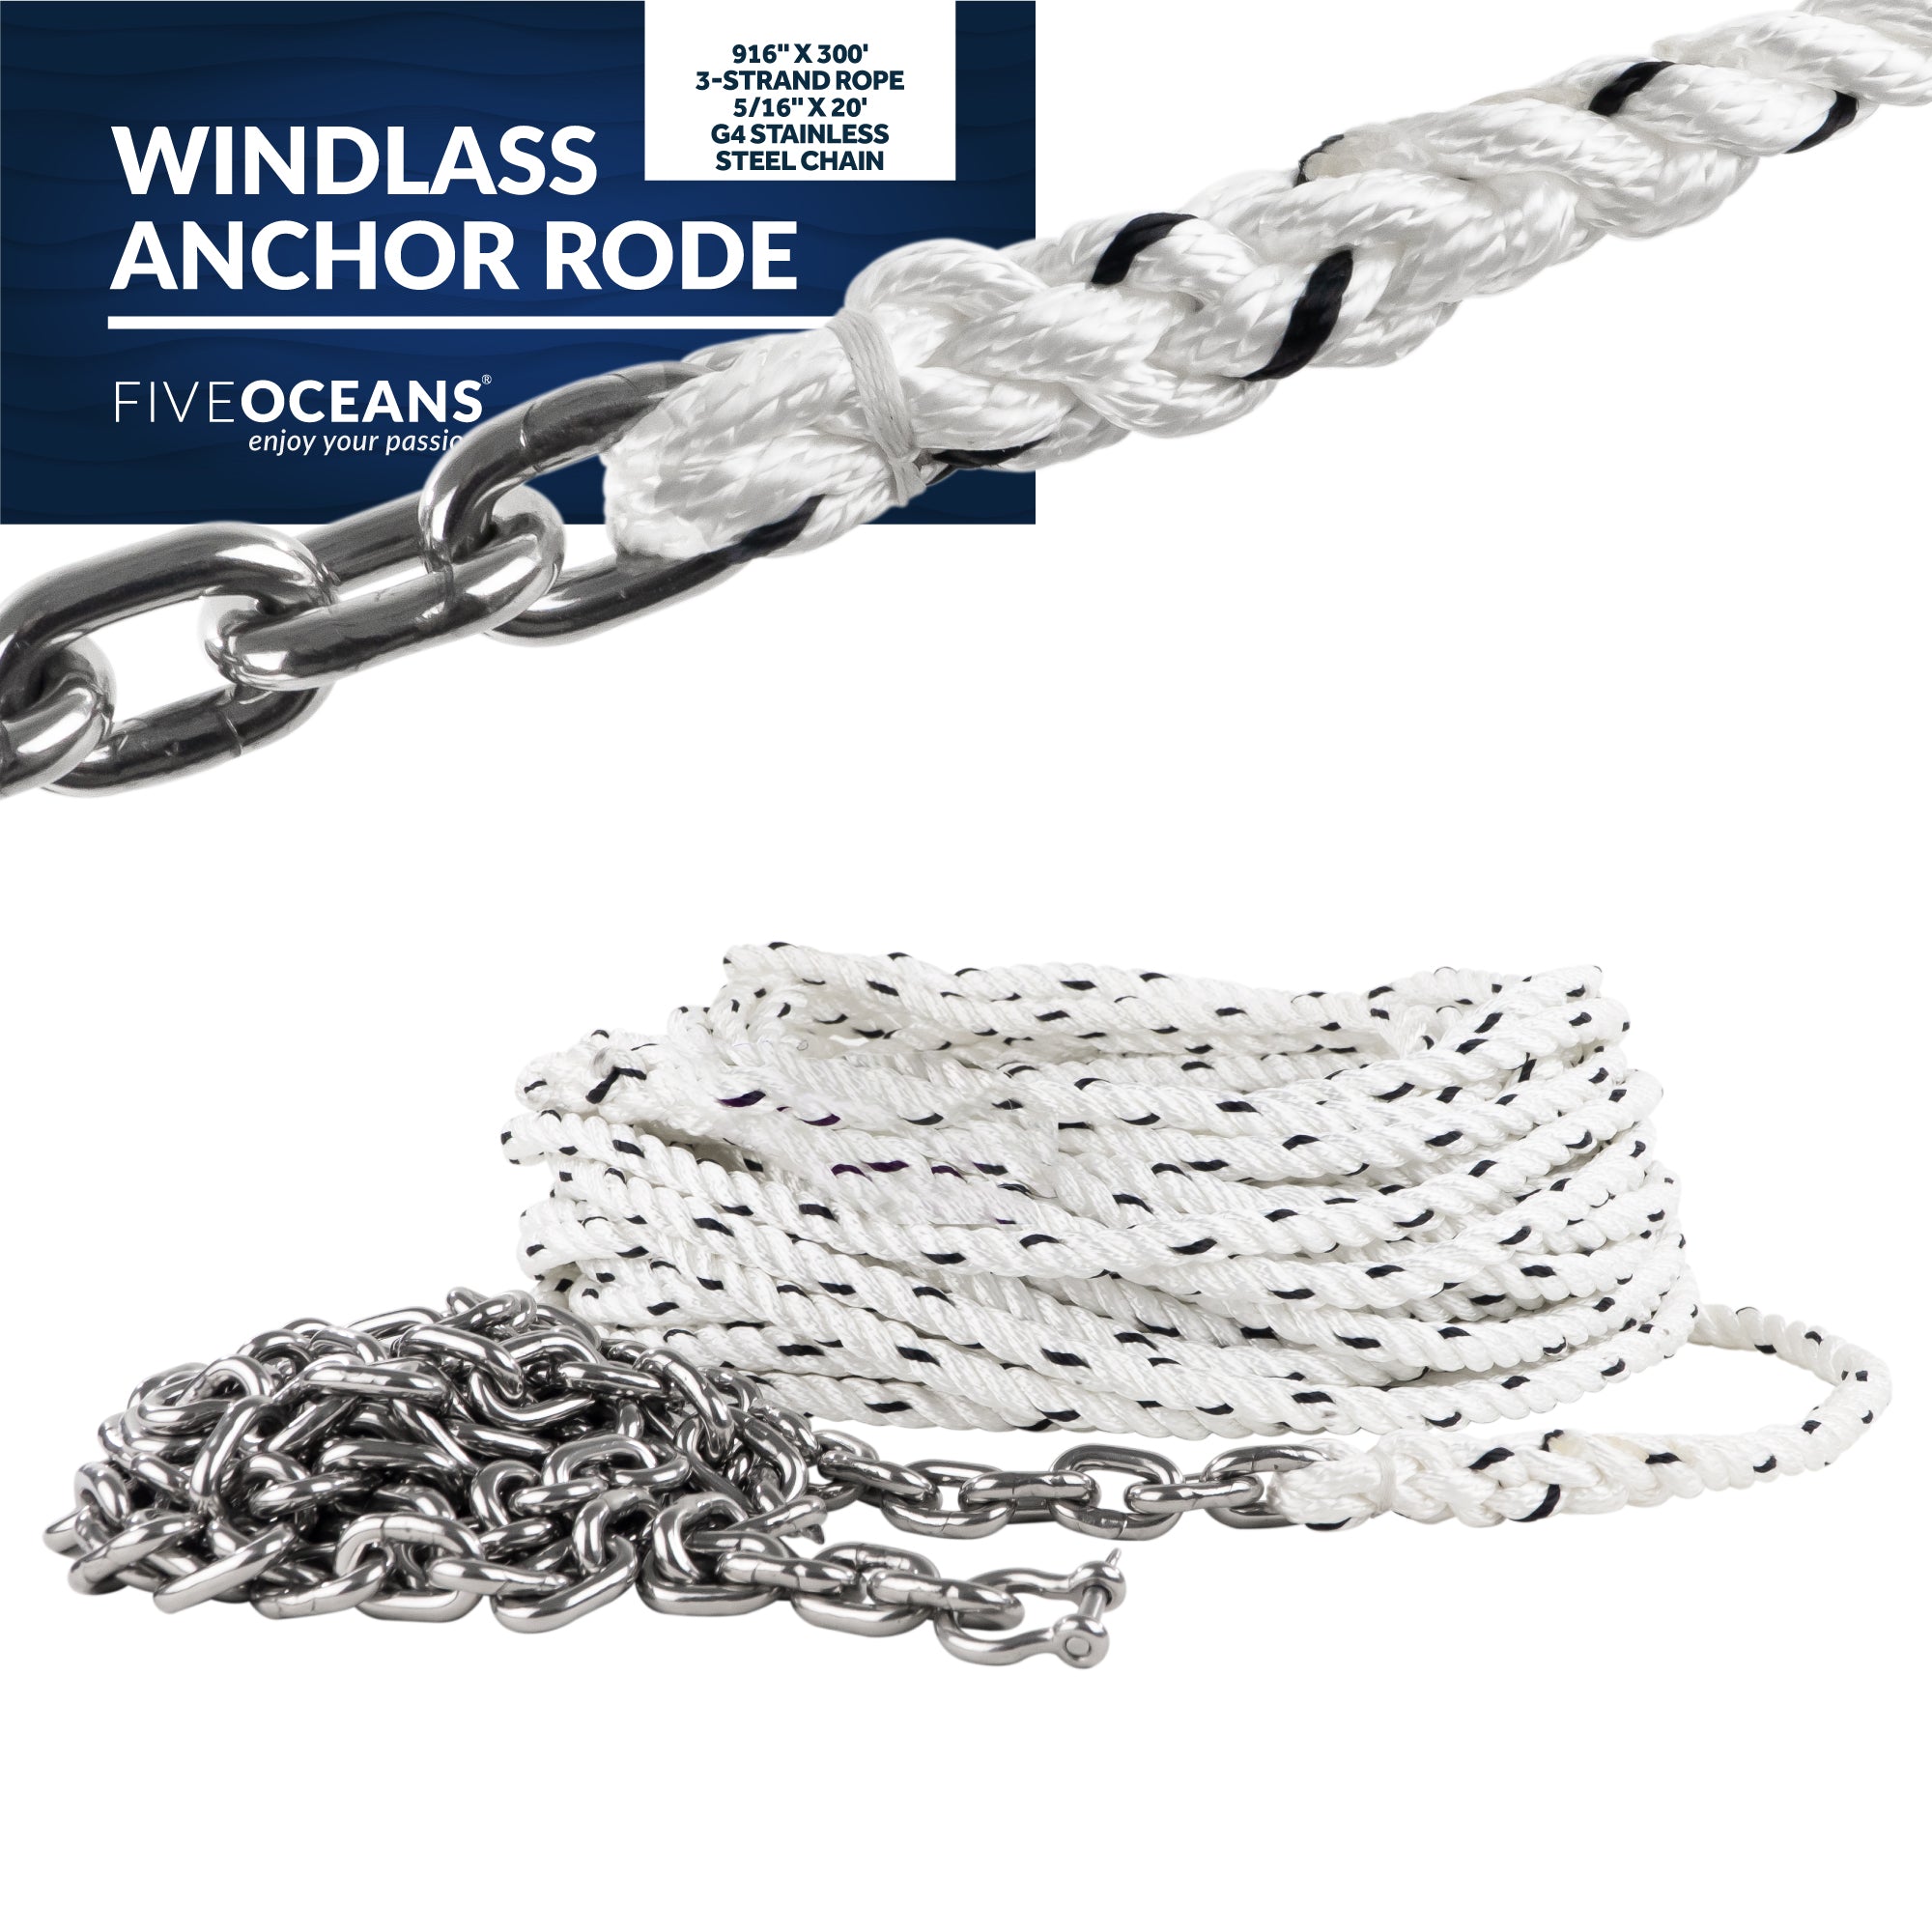 Windlass Anchor Rode, 9/16" x 300' Nylon 3-Strand Rope, 5/16" x 20' G4 Stainless Steel Chain - FO4580